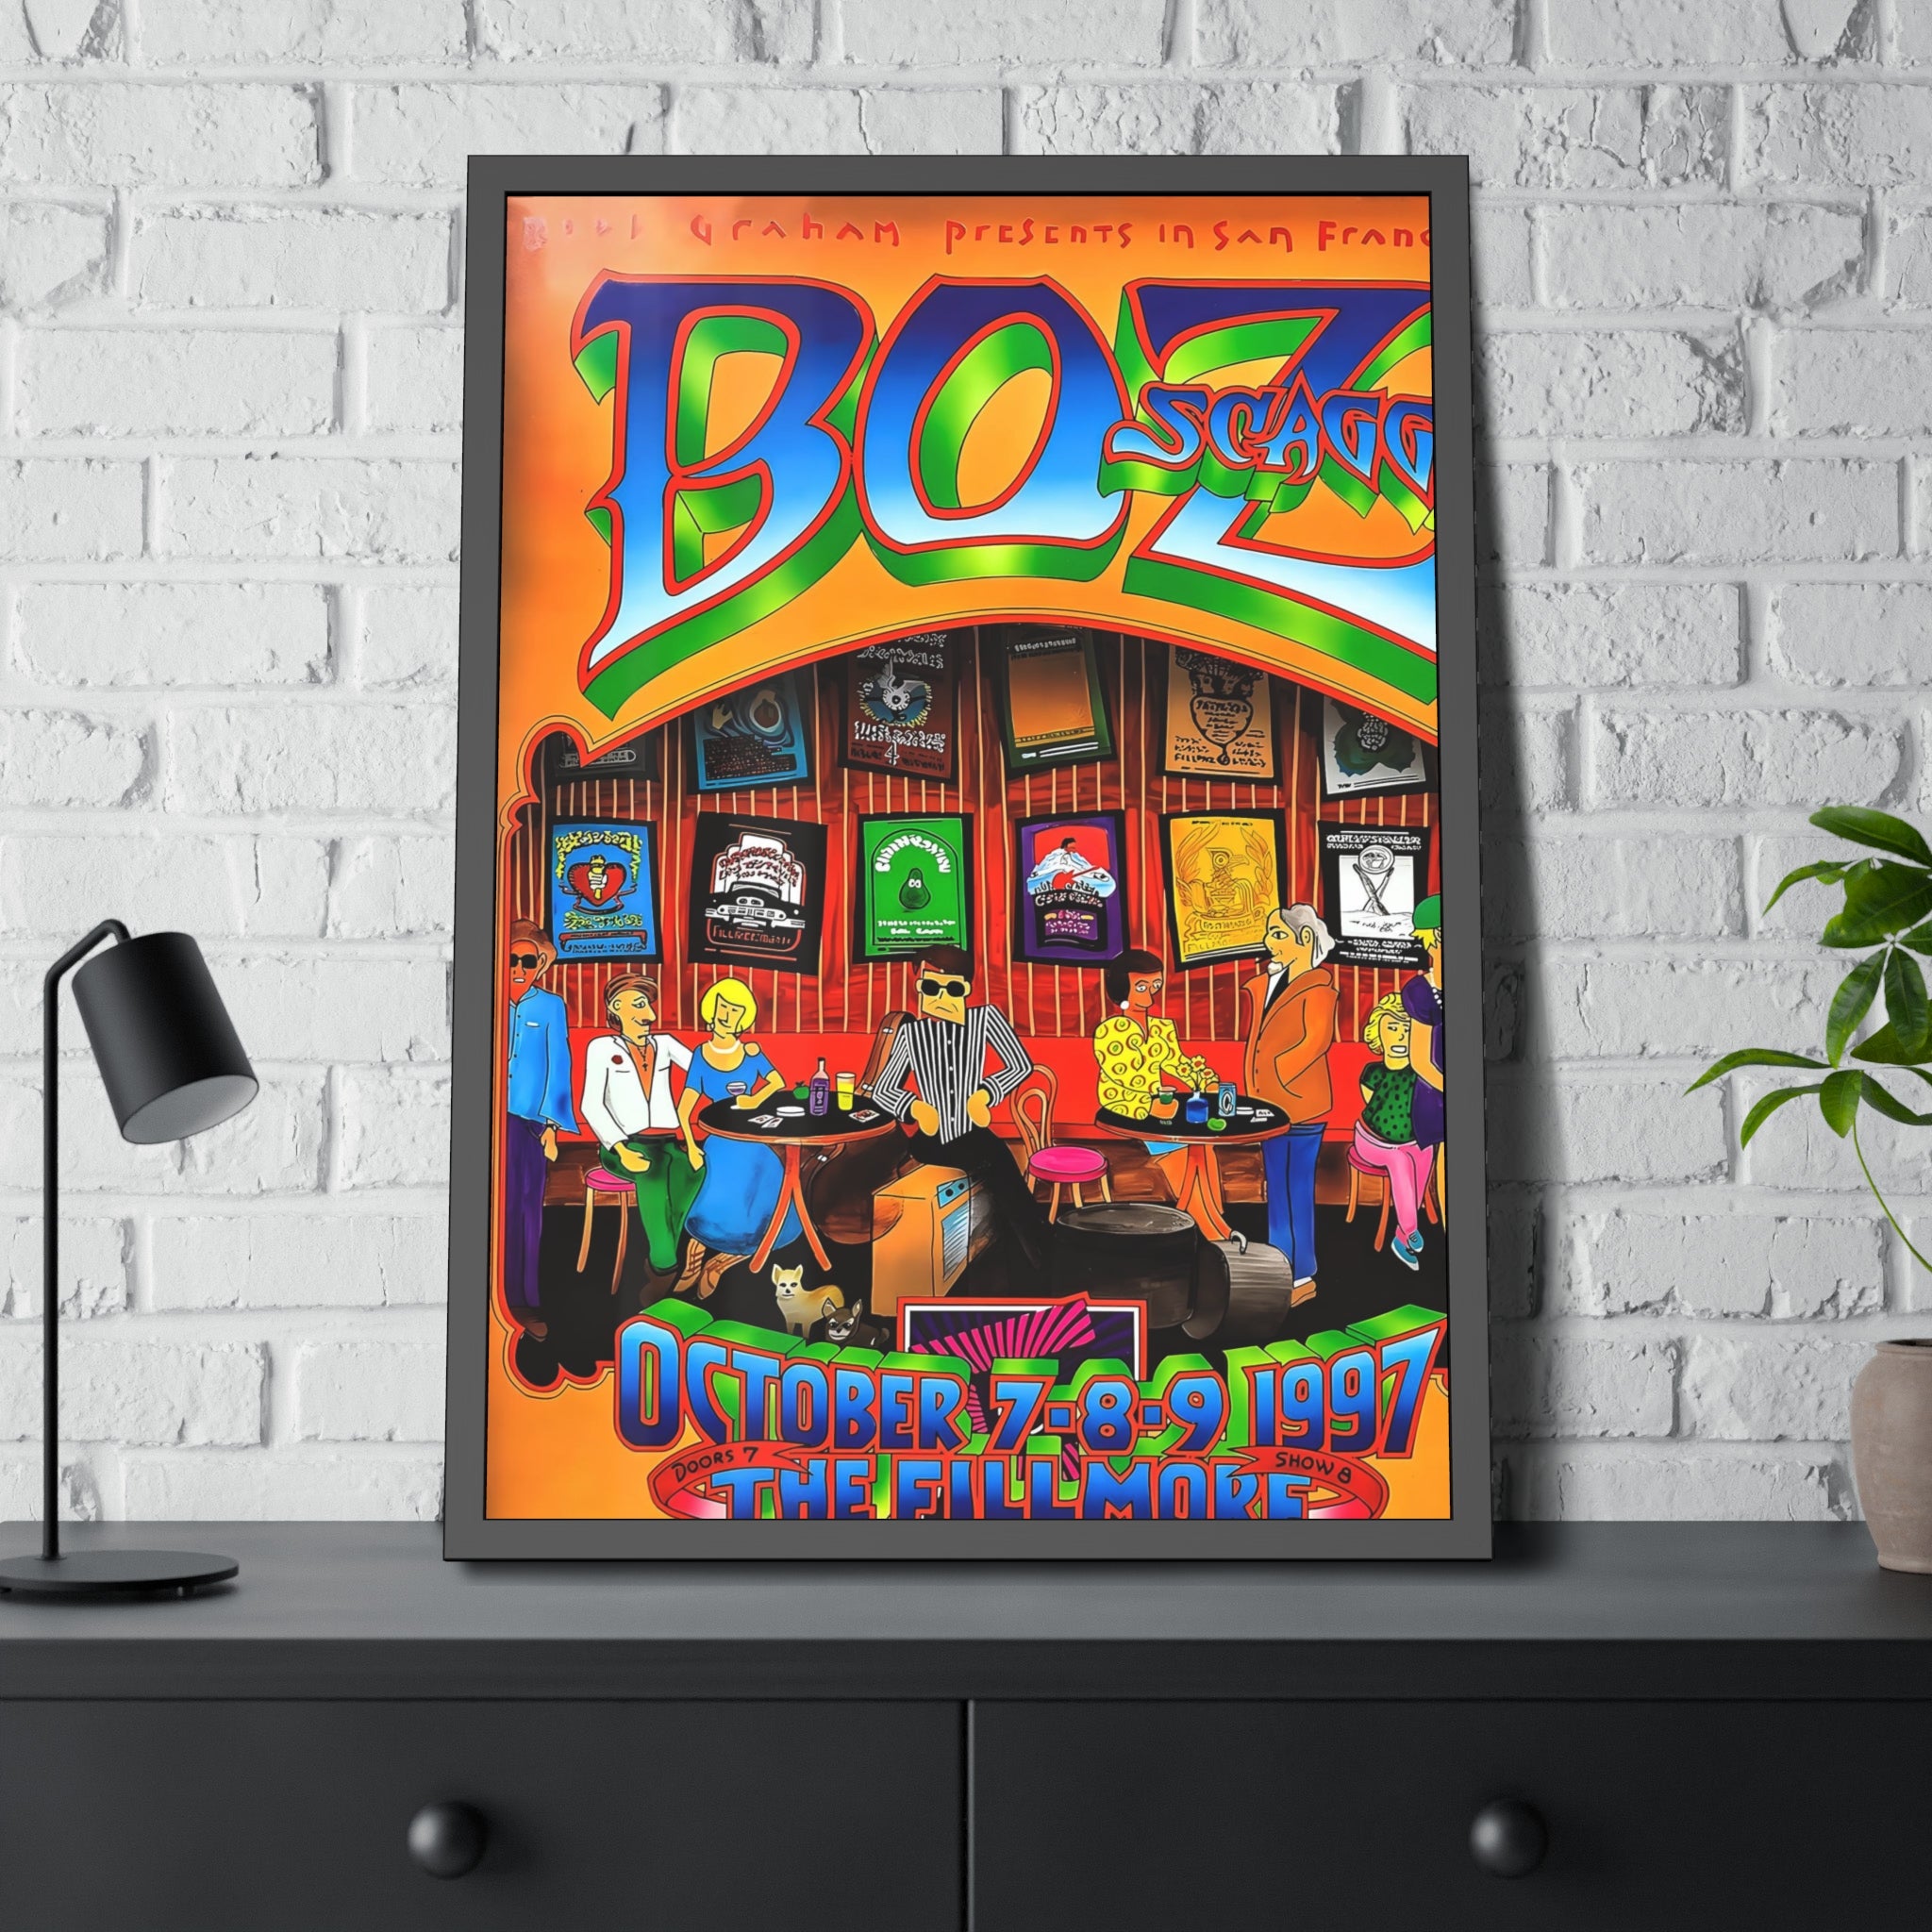 Boz Scaggs Concert Poster II